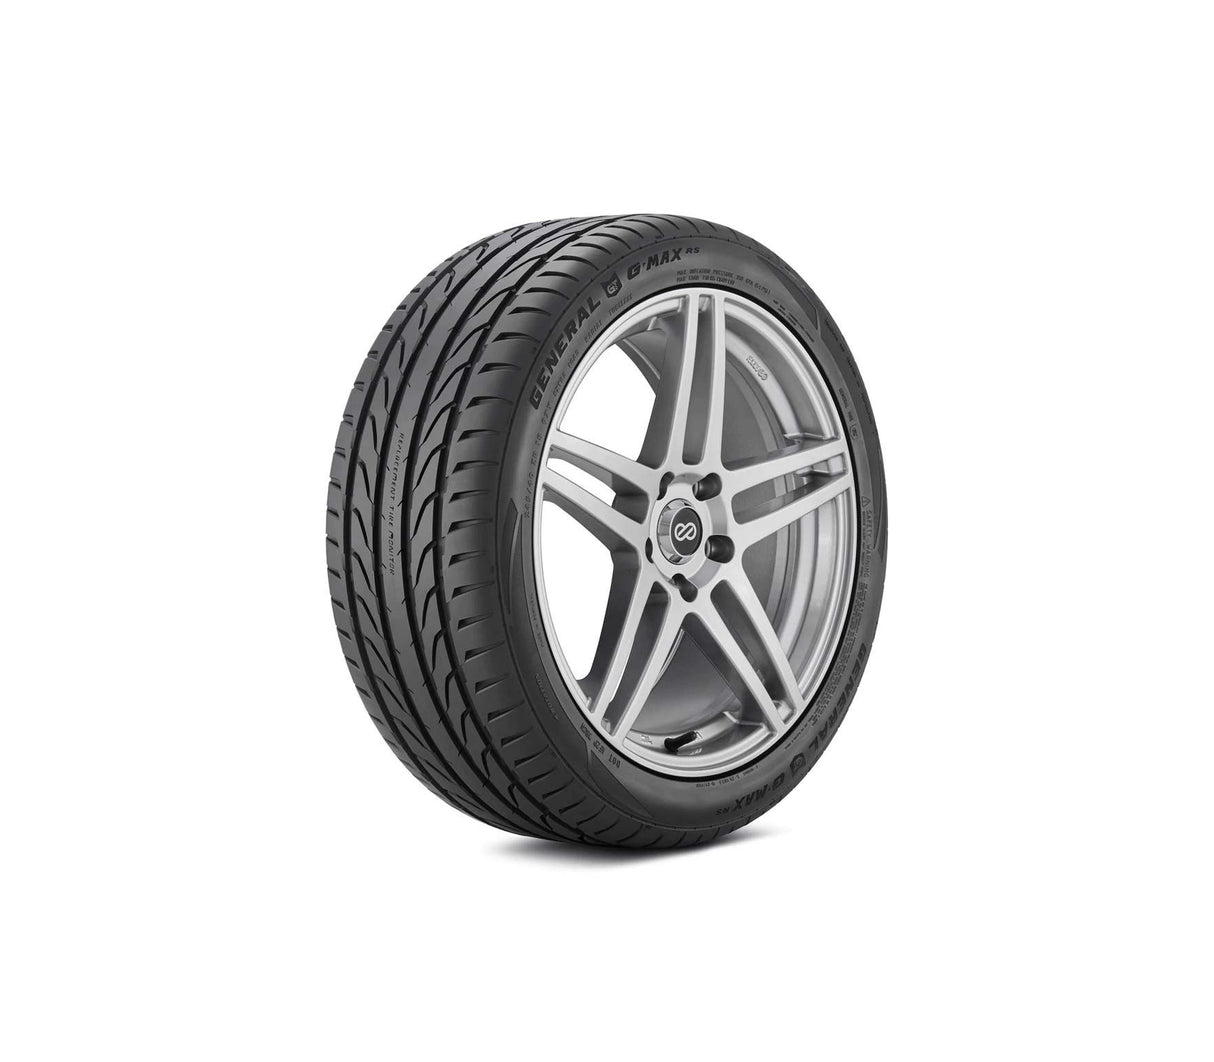 Neumático 195/60R14 86H G-MAX RS General Tires